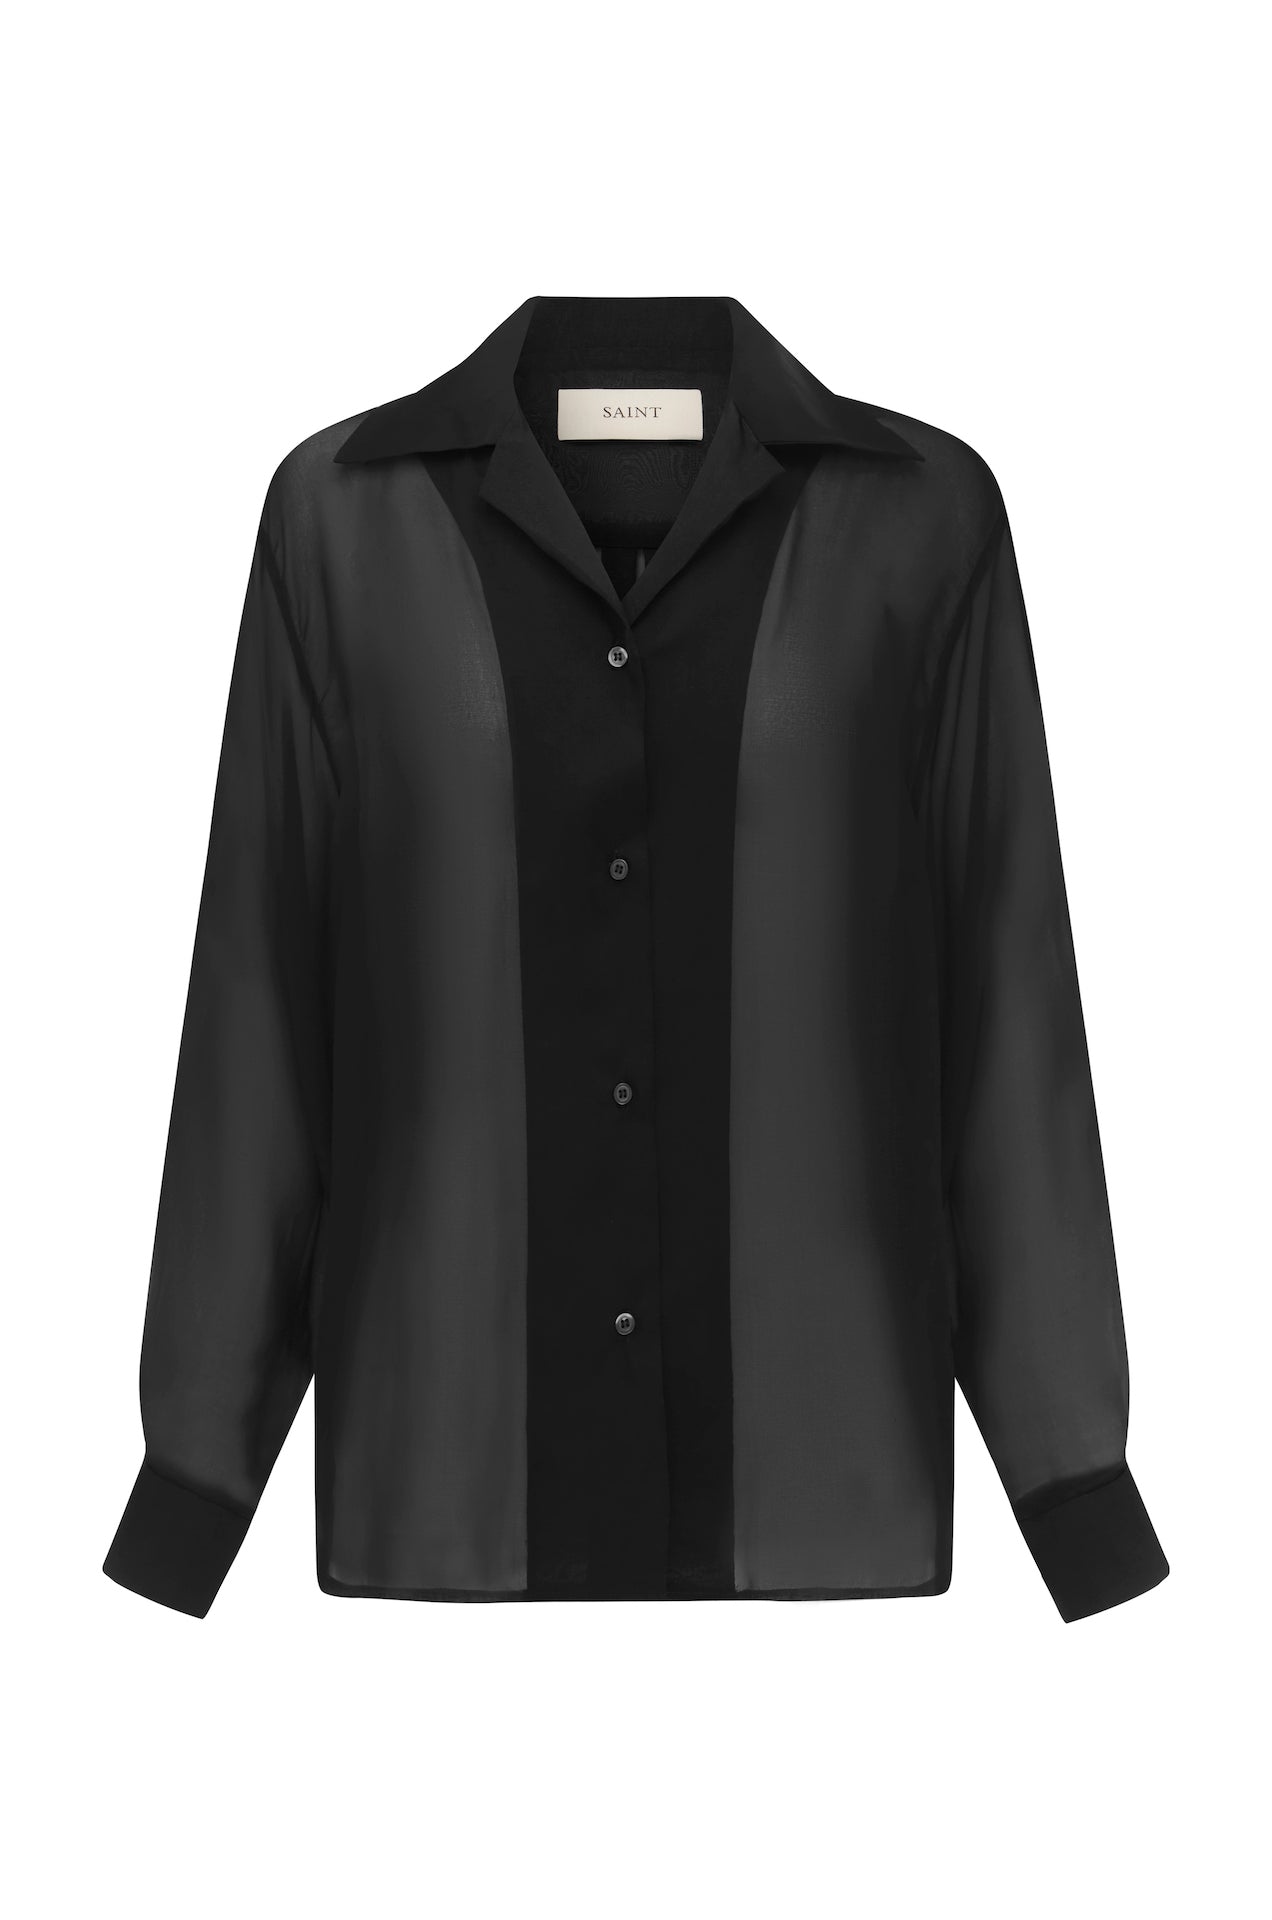 SAINT classic silk shirt sheer black pure silk. made in Australia. 100% silk chiffon